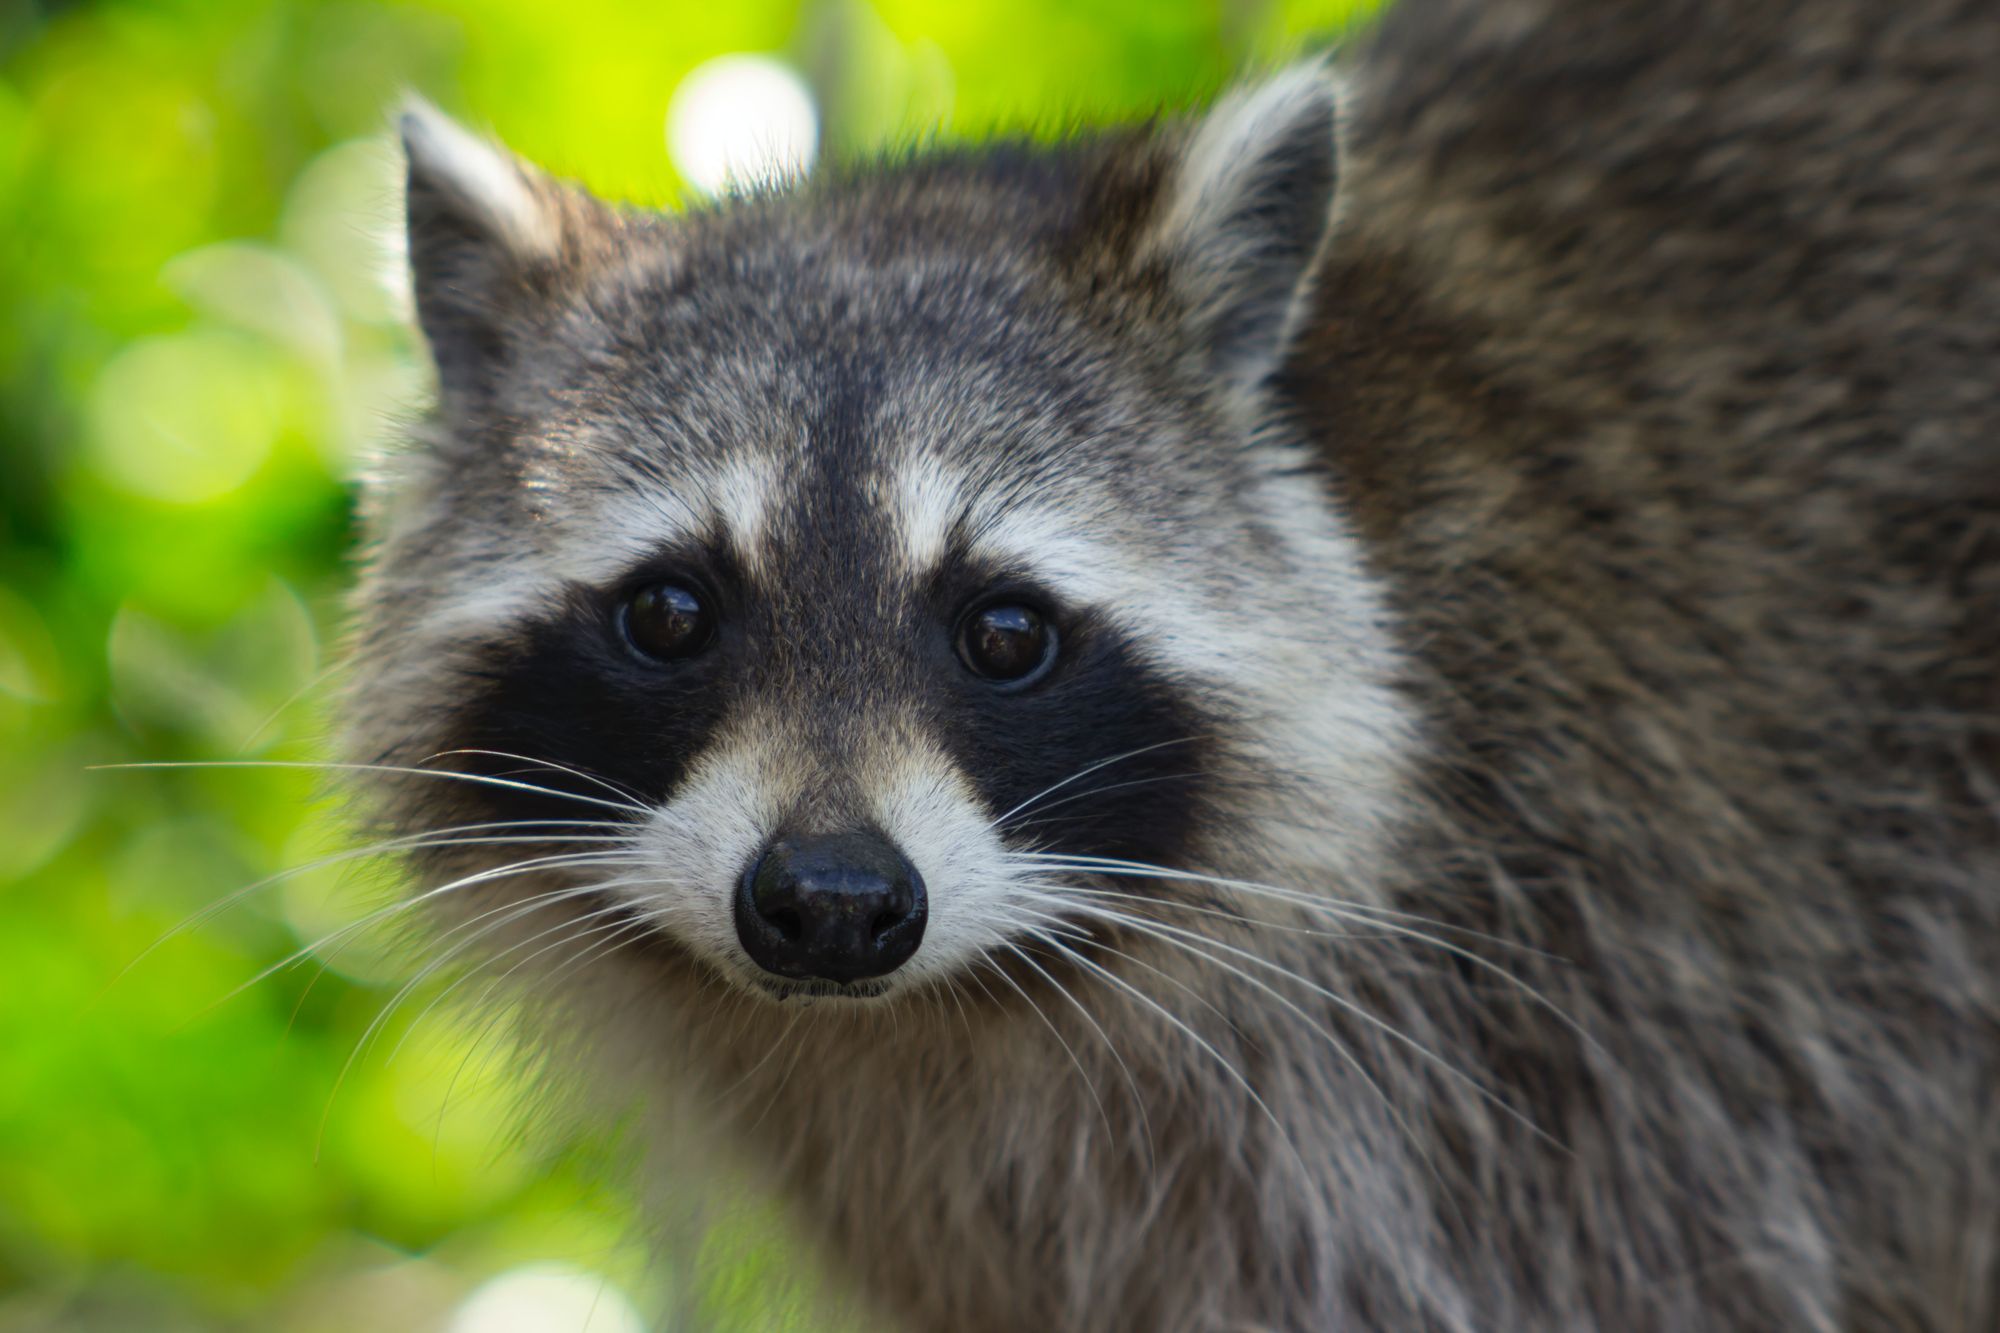 A photo of a raccoon